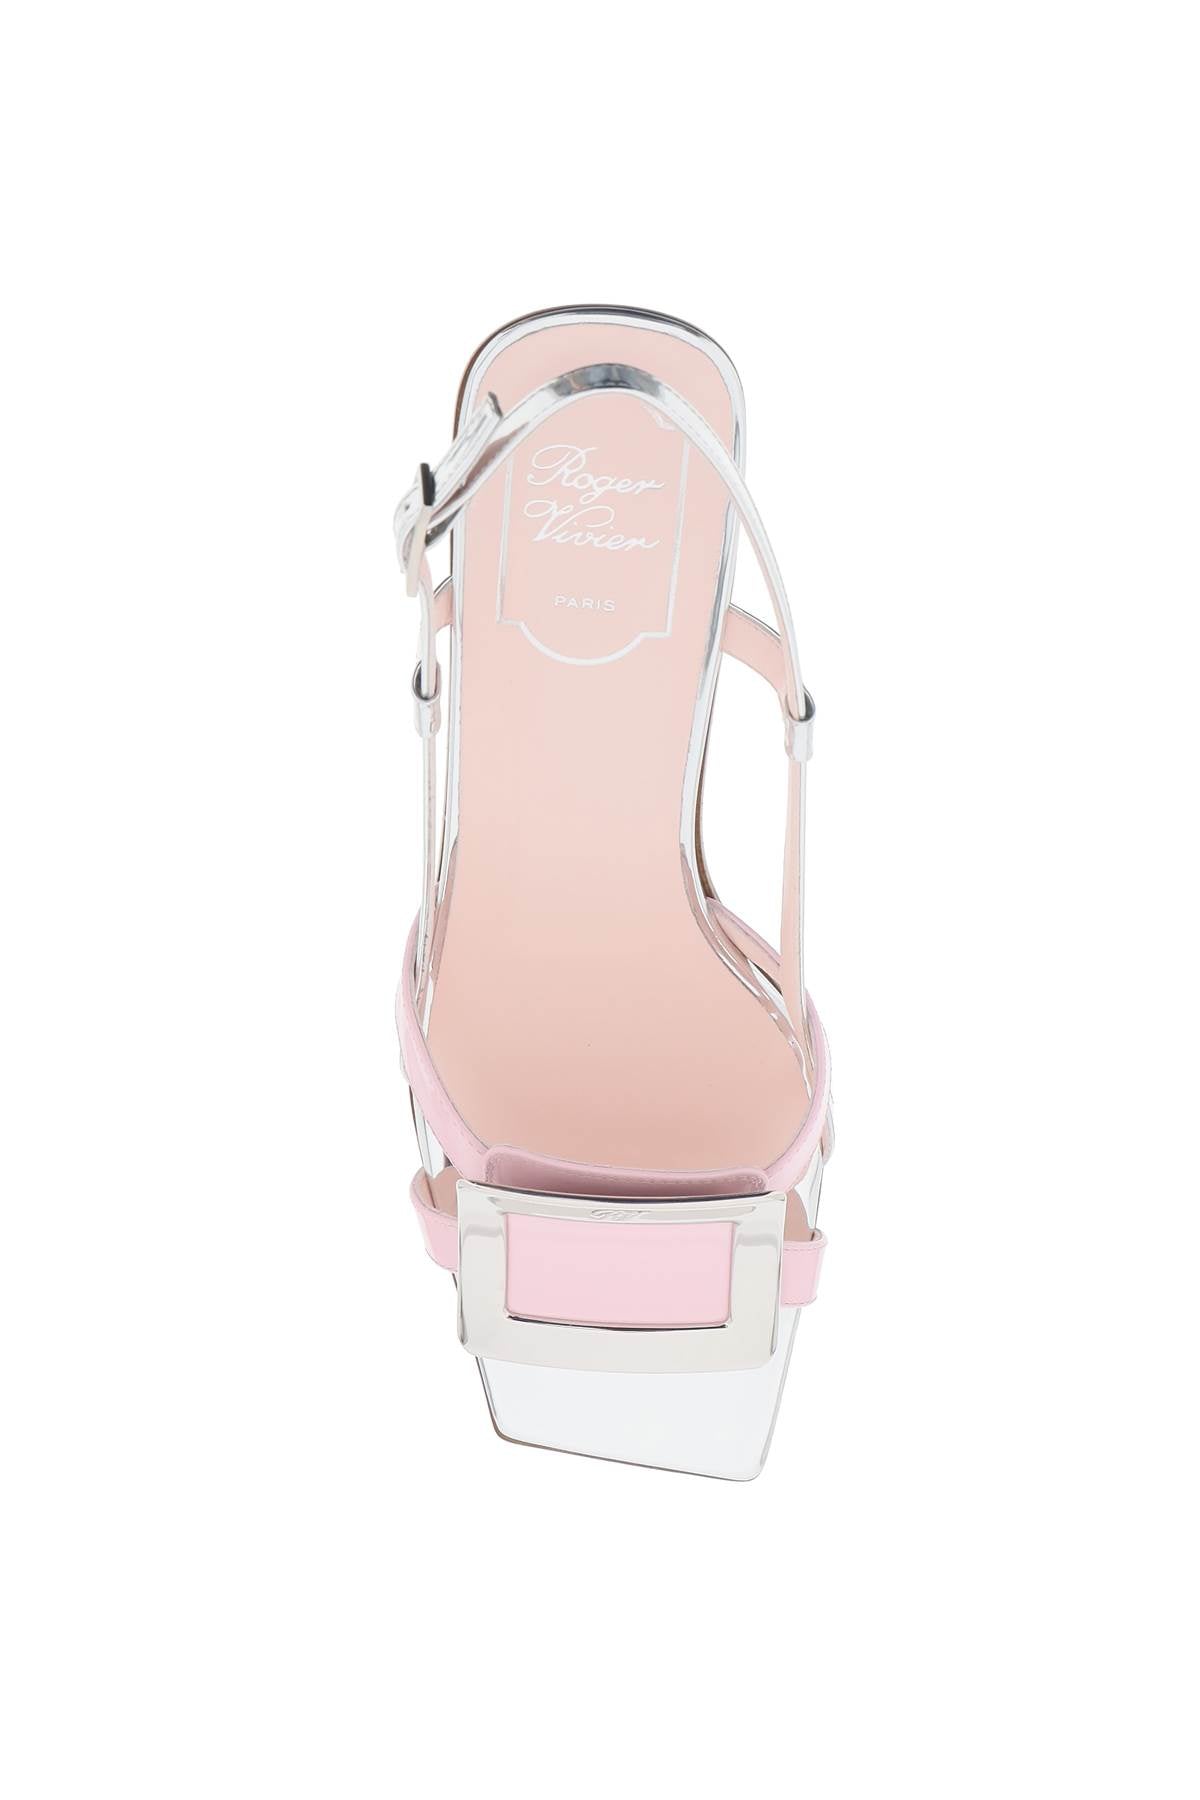 ROGER VIVIER Multicolor Belle Vivier Sandals - Chic and Comfortable for Women